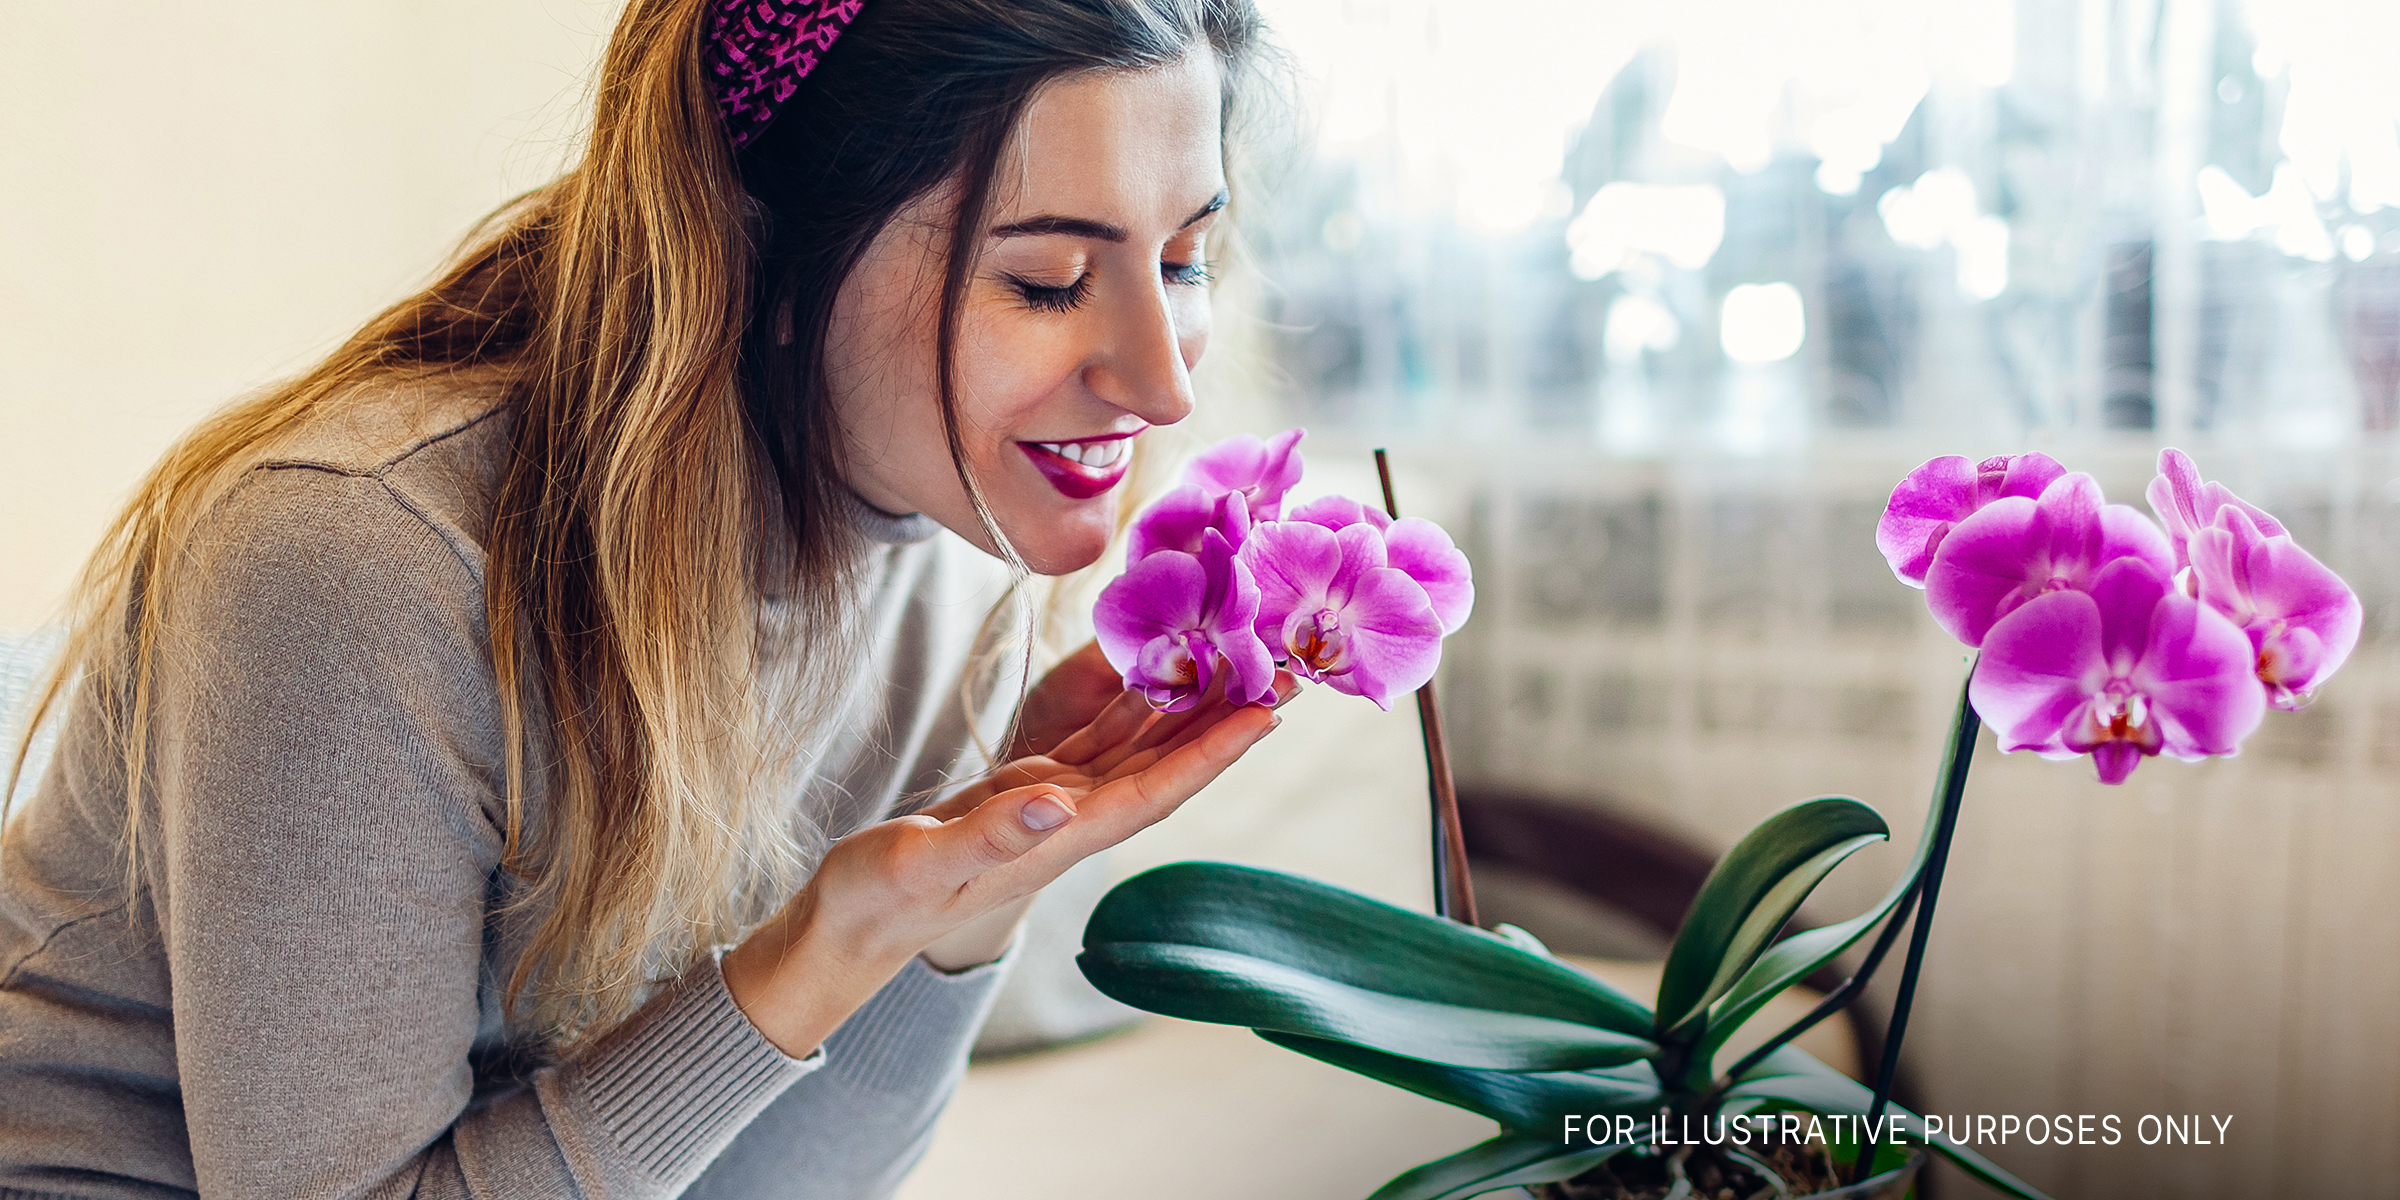 A woman smelling purple orchid flowers | Source: Shutterstock